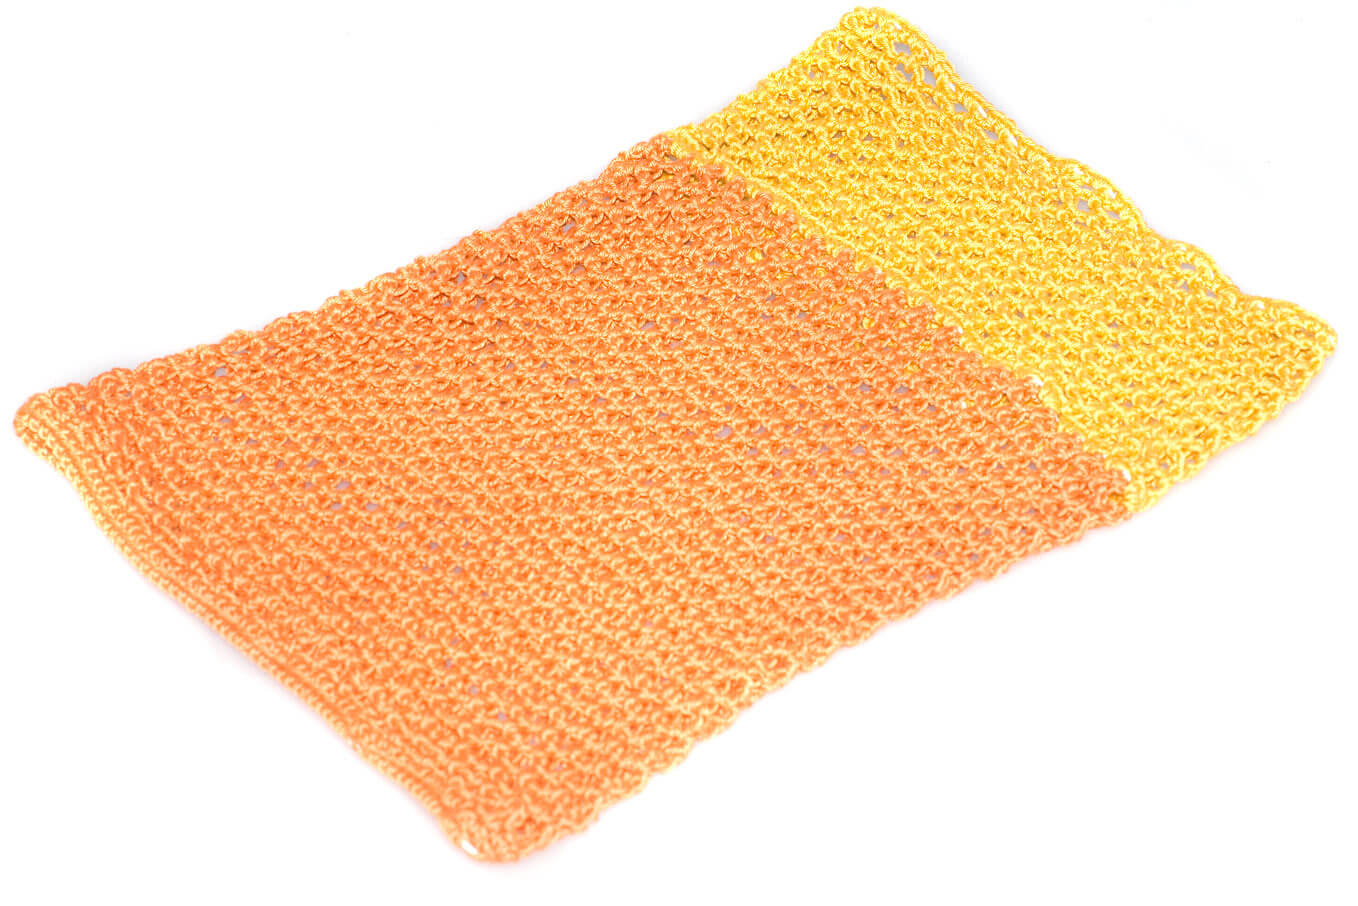 Orange and yellow cotton crochet dog snood